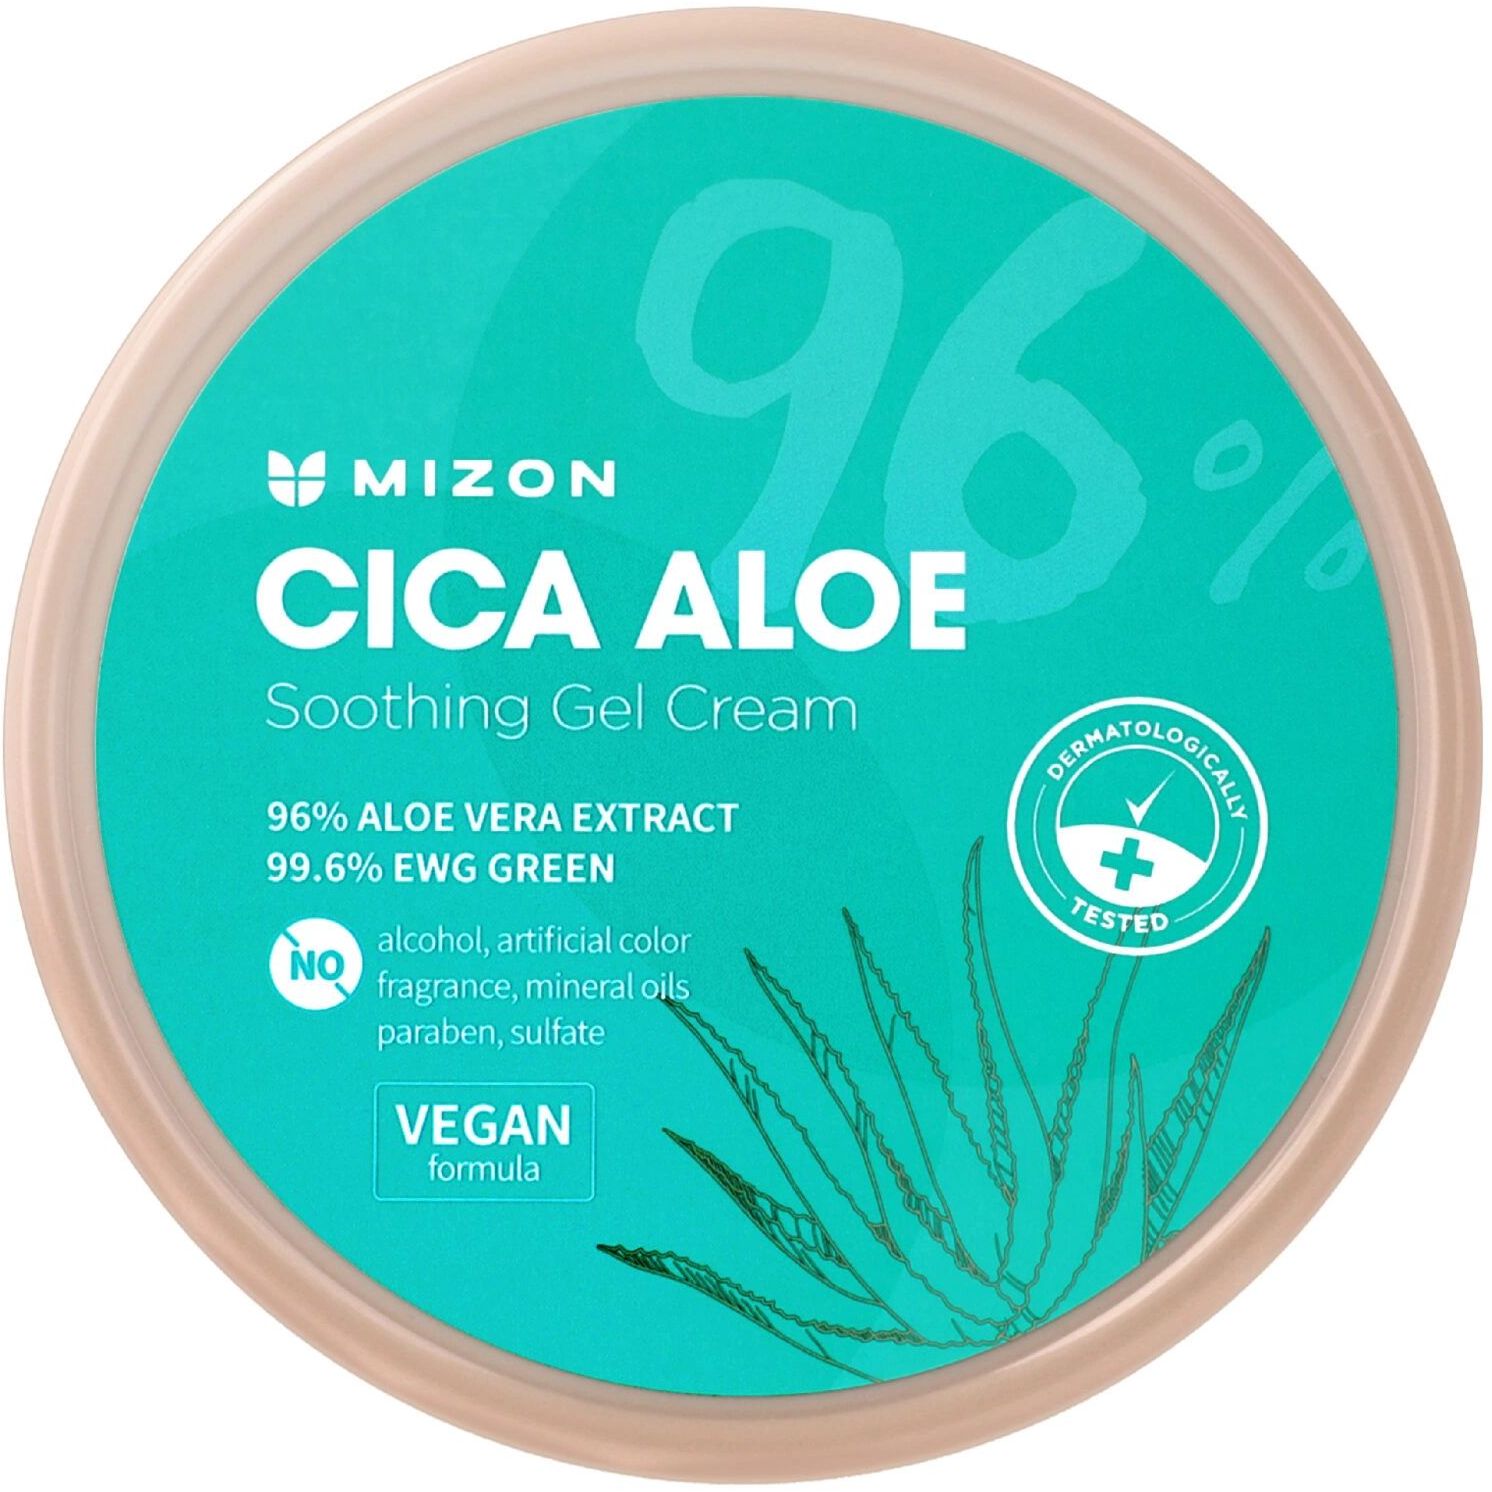 Заспокійливий гель-крем для тіла Mizon Cica Aloe 96% Soothing Gel Cream з алое, 300 г - фото 1